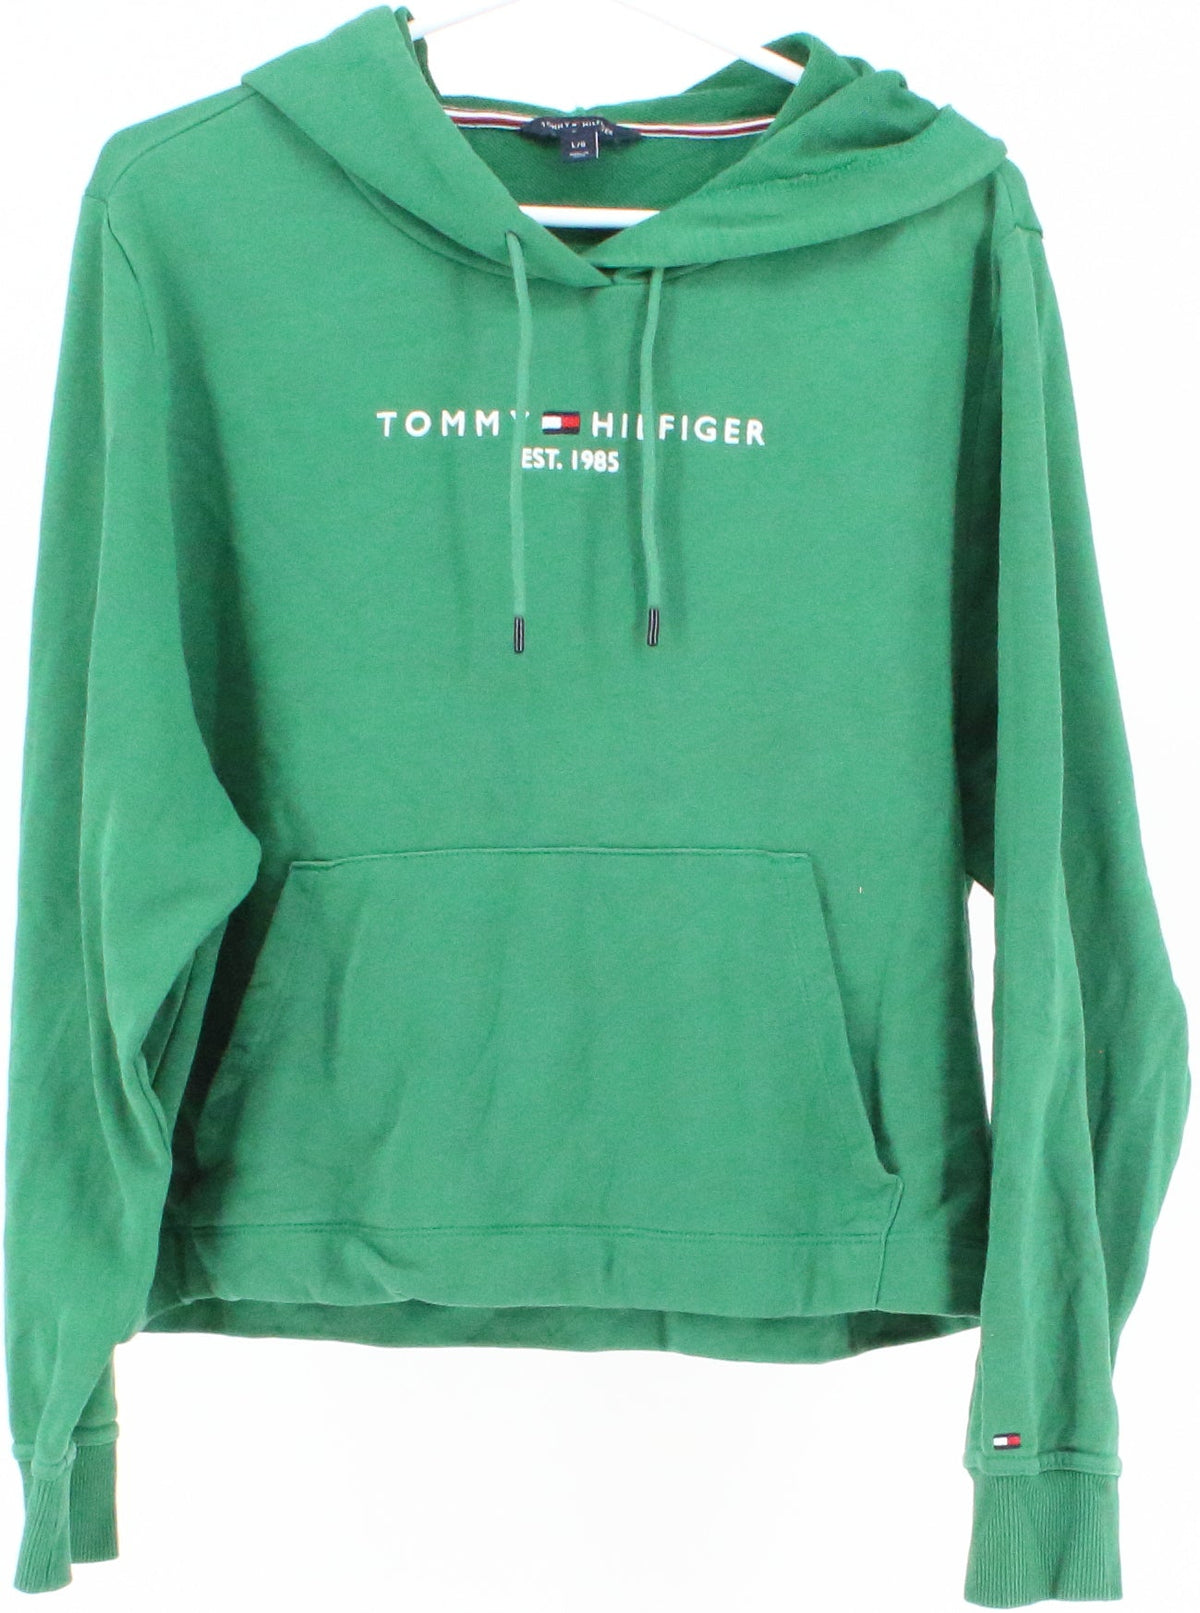 Tommy Hilfiger Green Hooded Sweatshirt